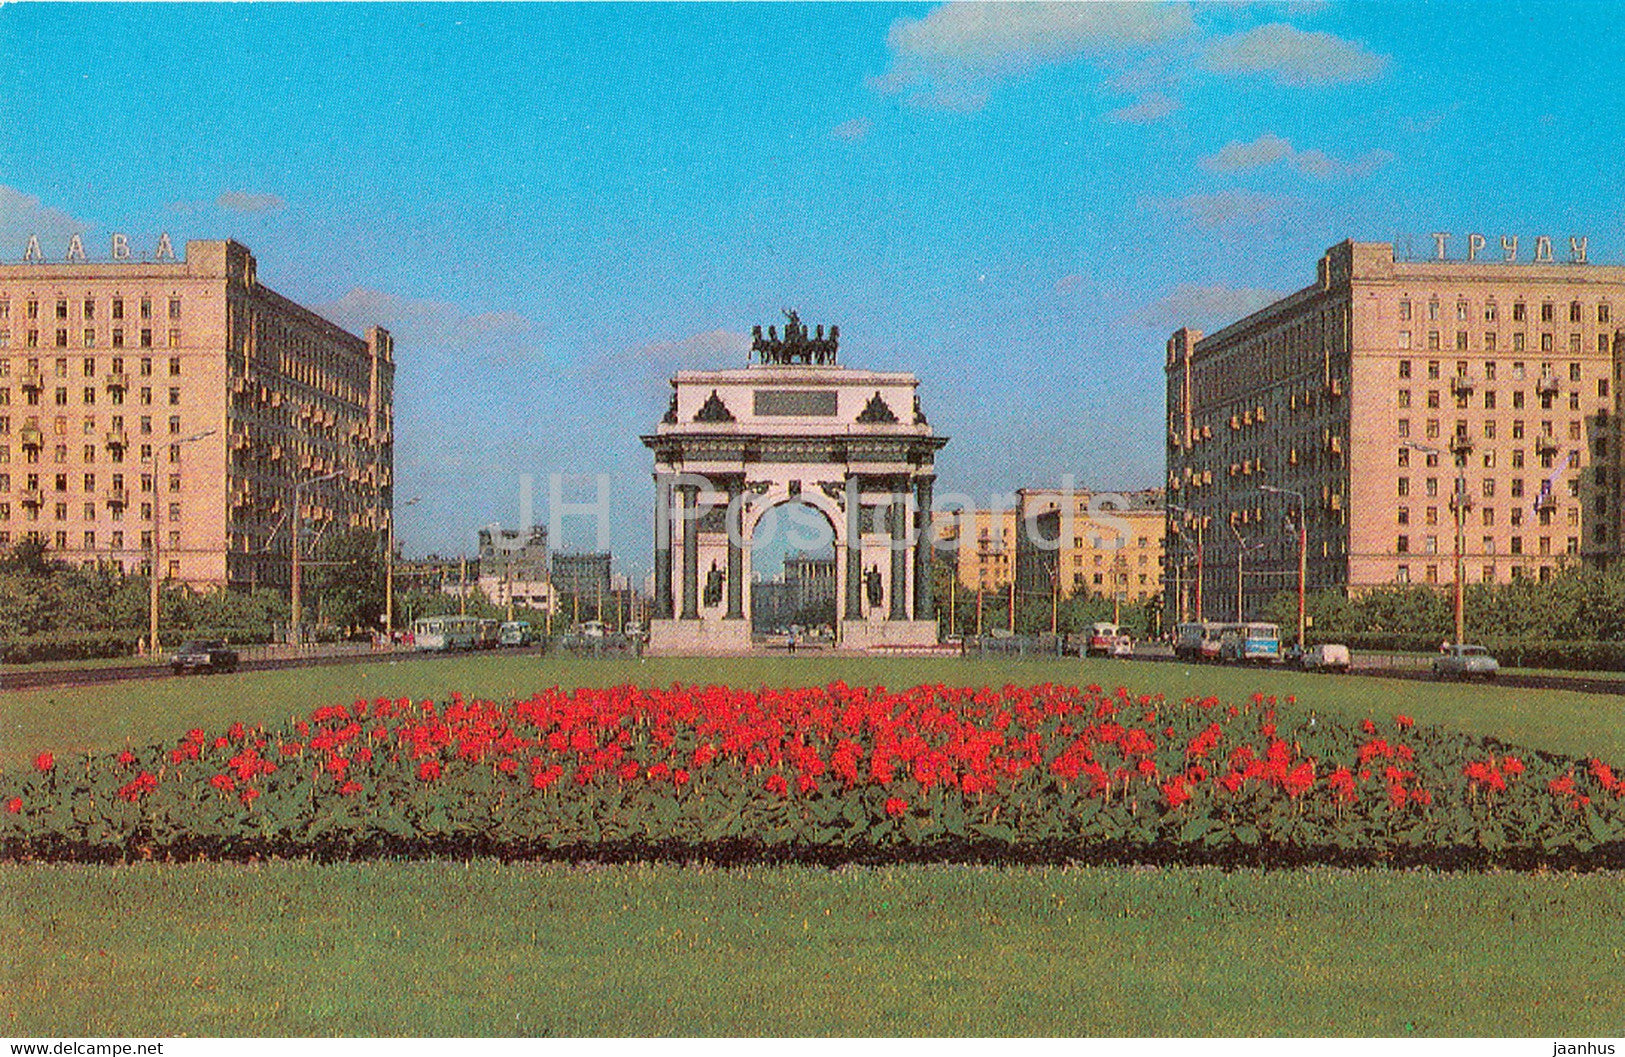 Moscow - Kutuzov avenue - Triumphal Arch - 1974 - Russia USSR - unused - JH Postcards